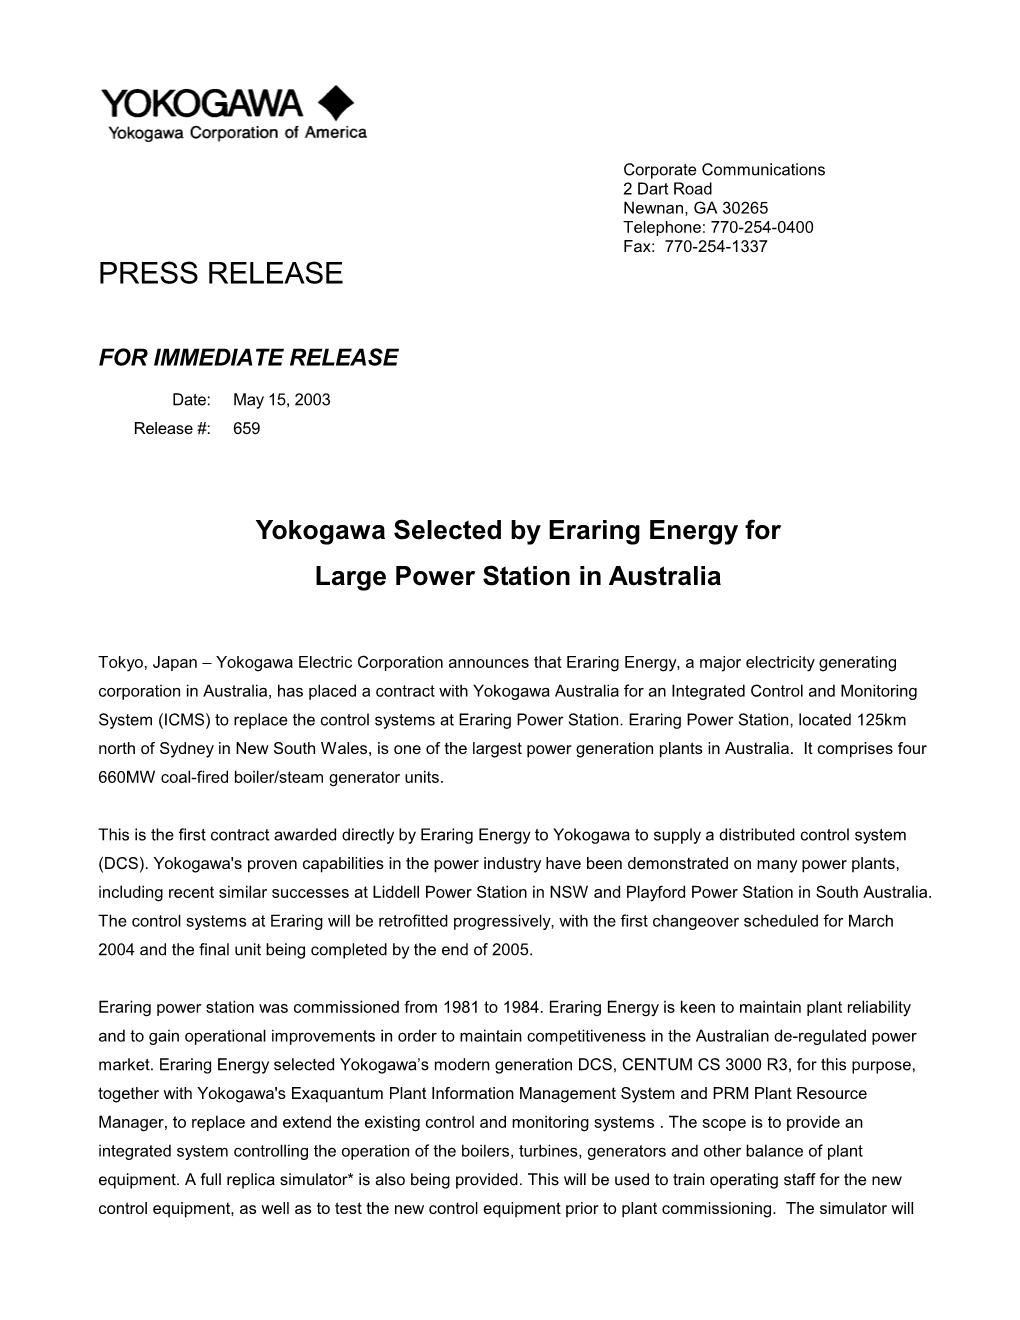 Yokogawa Selected by Eraring Energy for Large Power Station in Australia